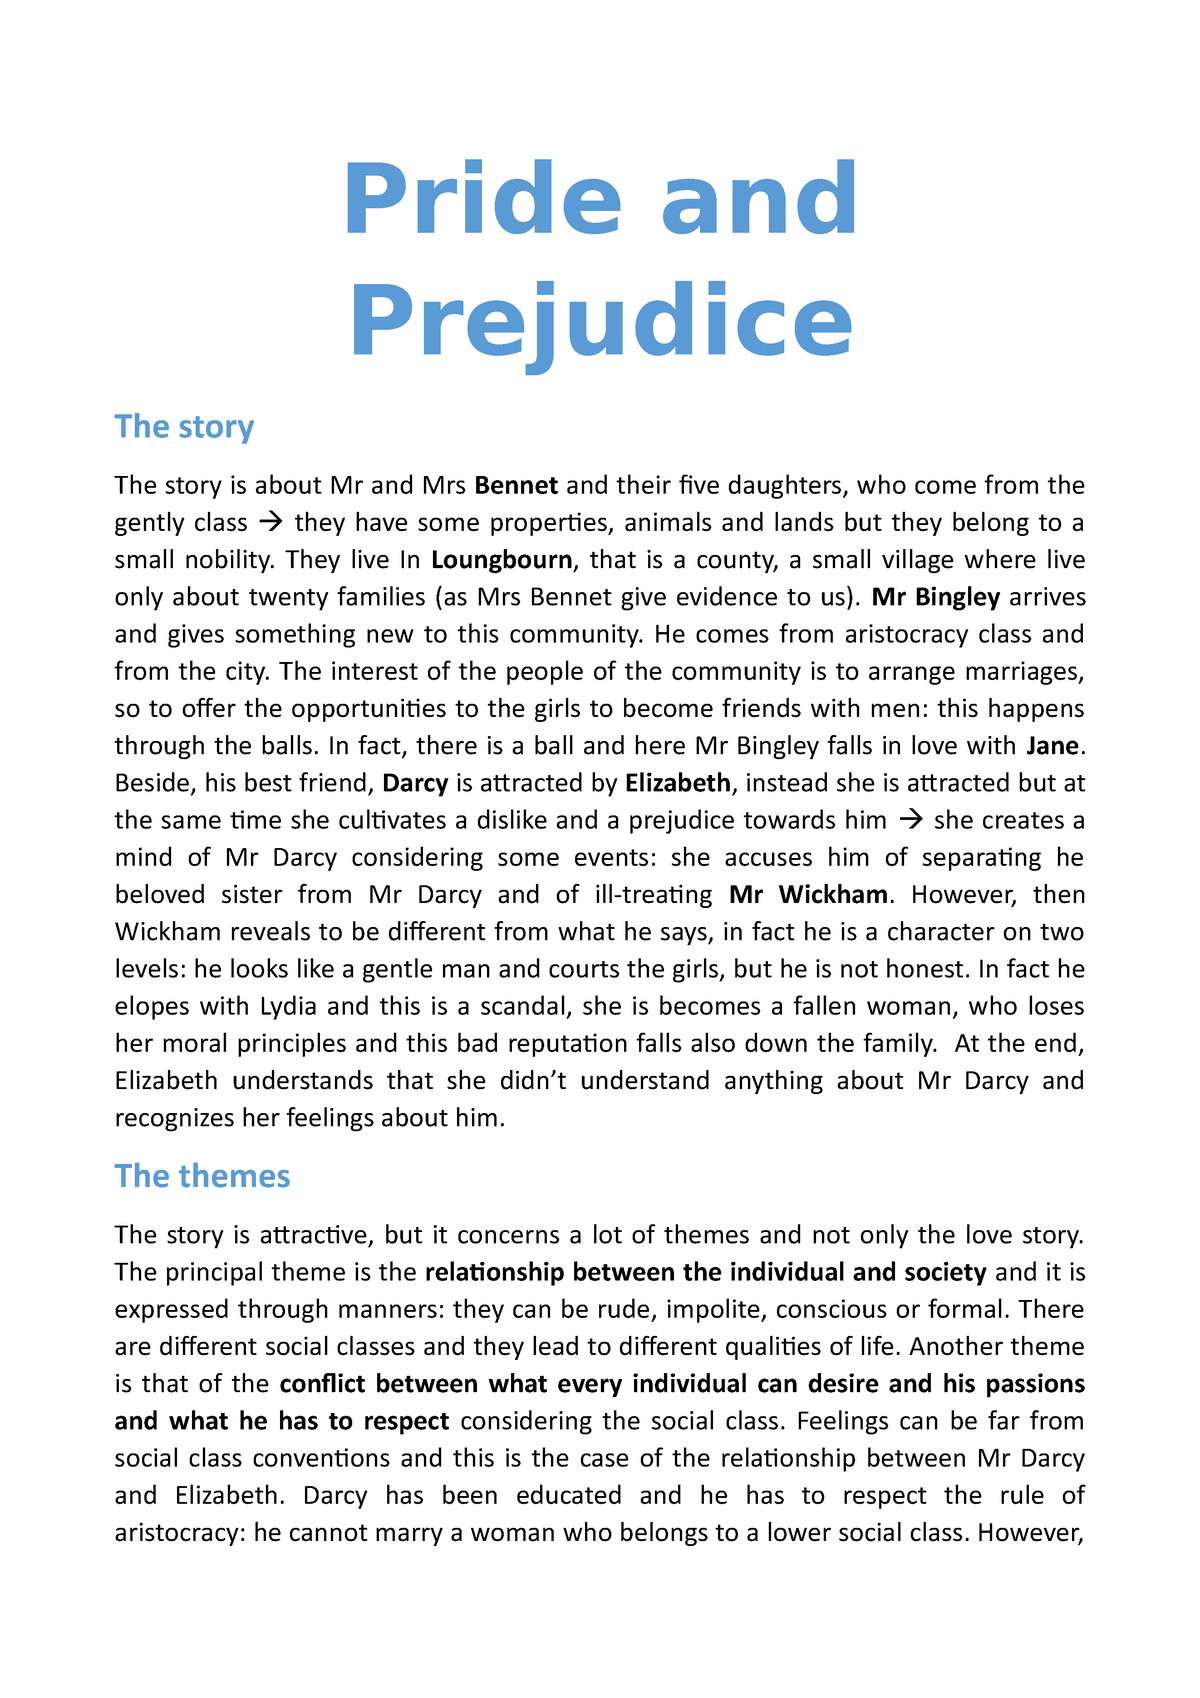 conclusion paragraph for pride and prejudice essay